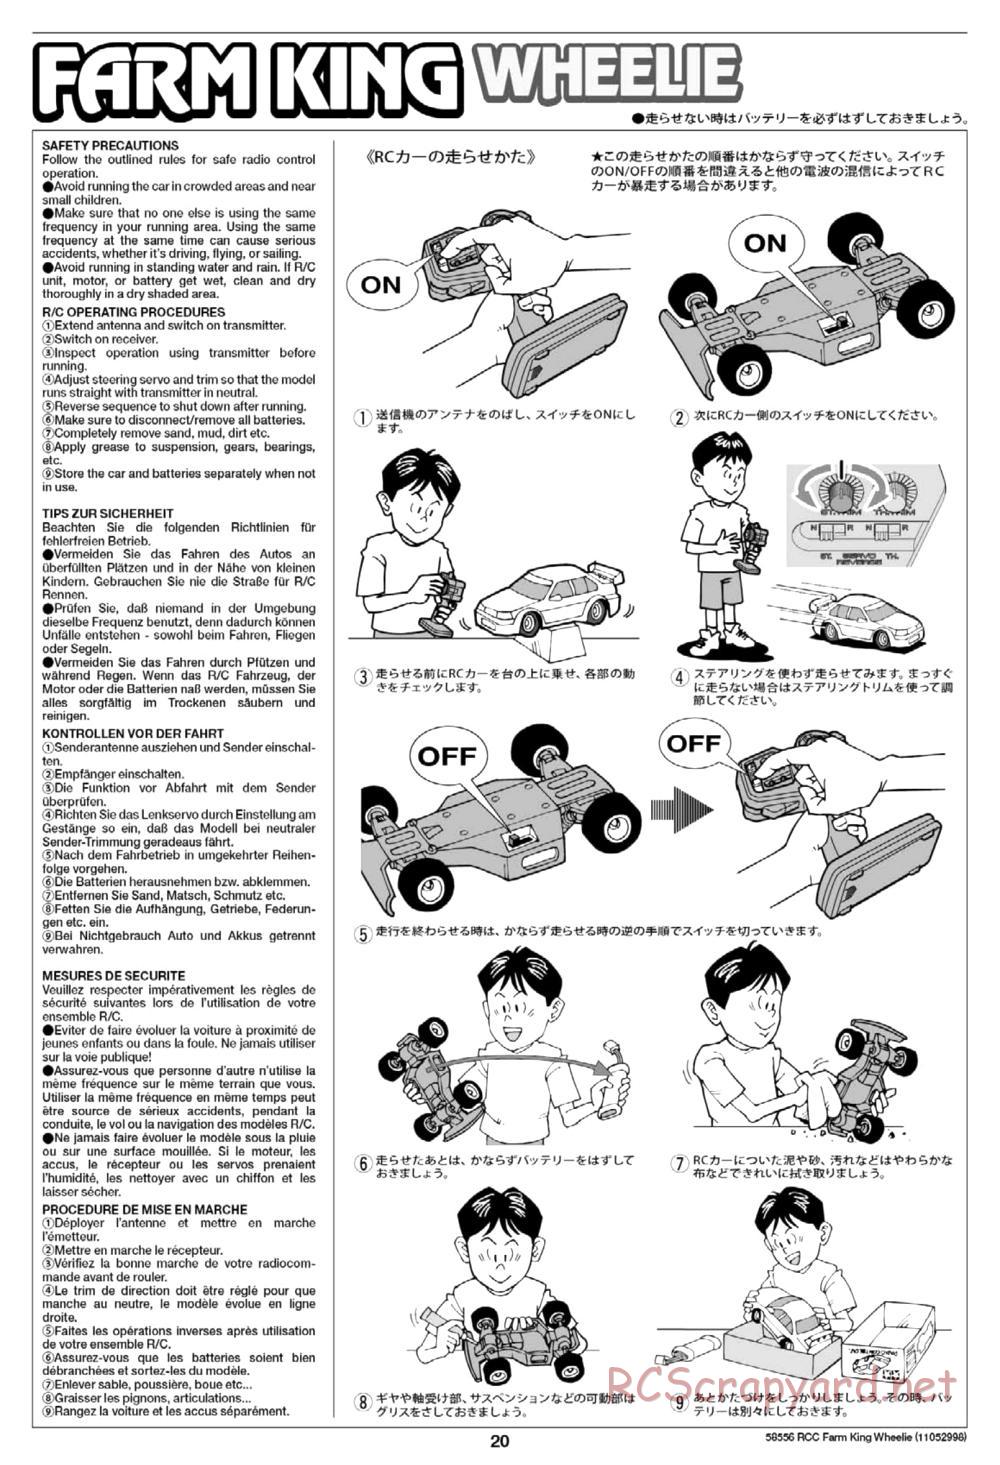 Tamiya - Farm King Wheelie Chassis - Manual - Page 20